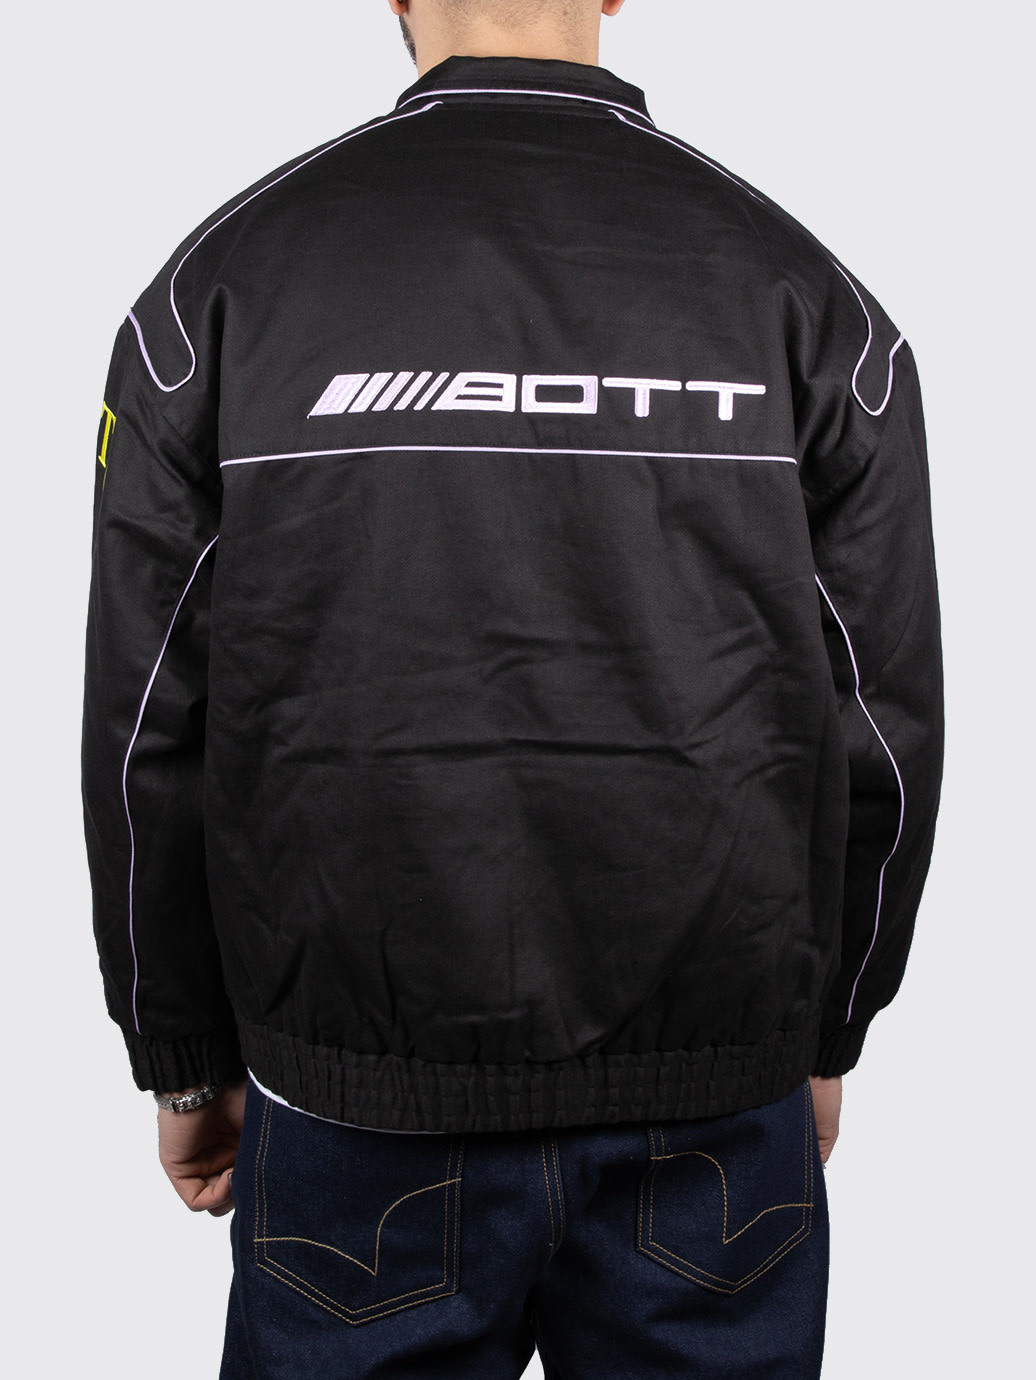 Bott Cotton Racing Jacket Lサイズ-